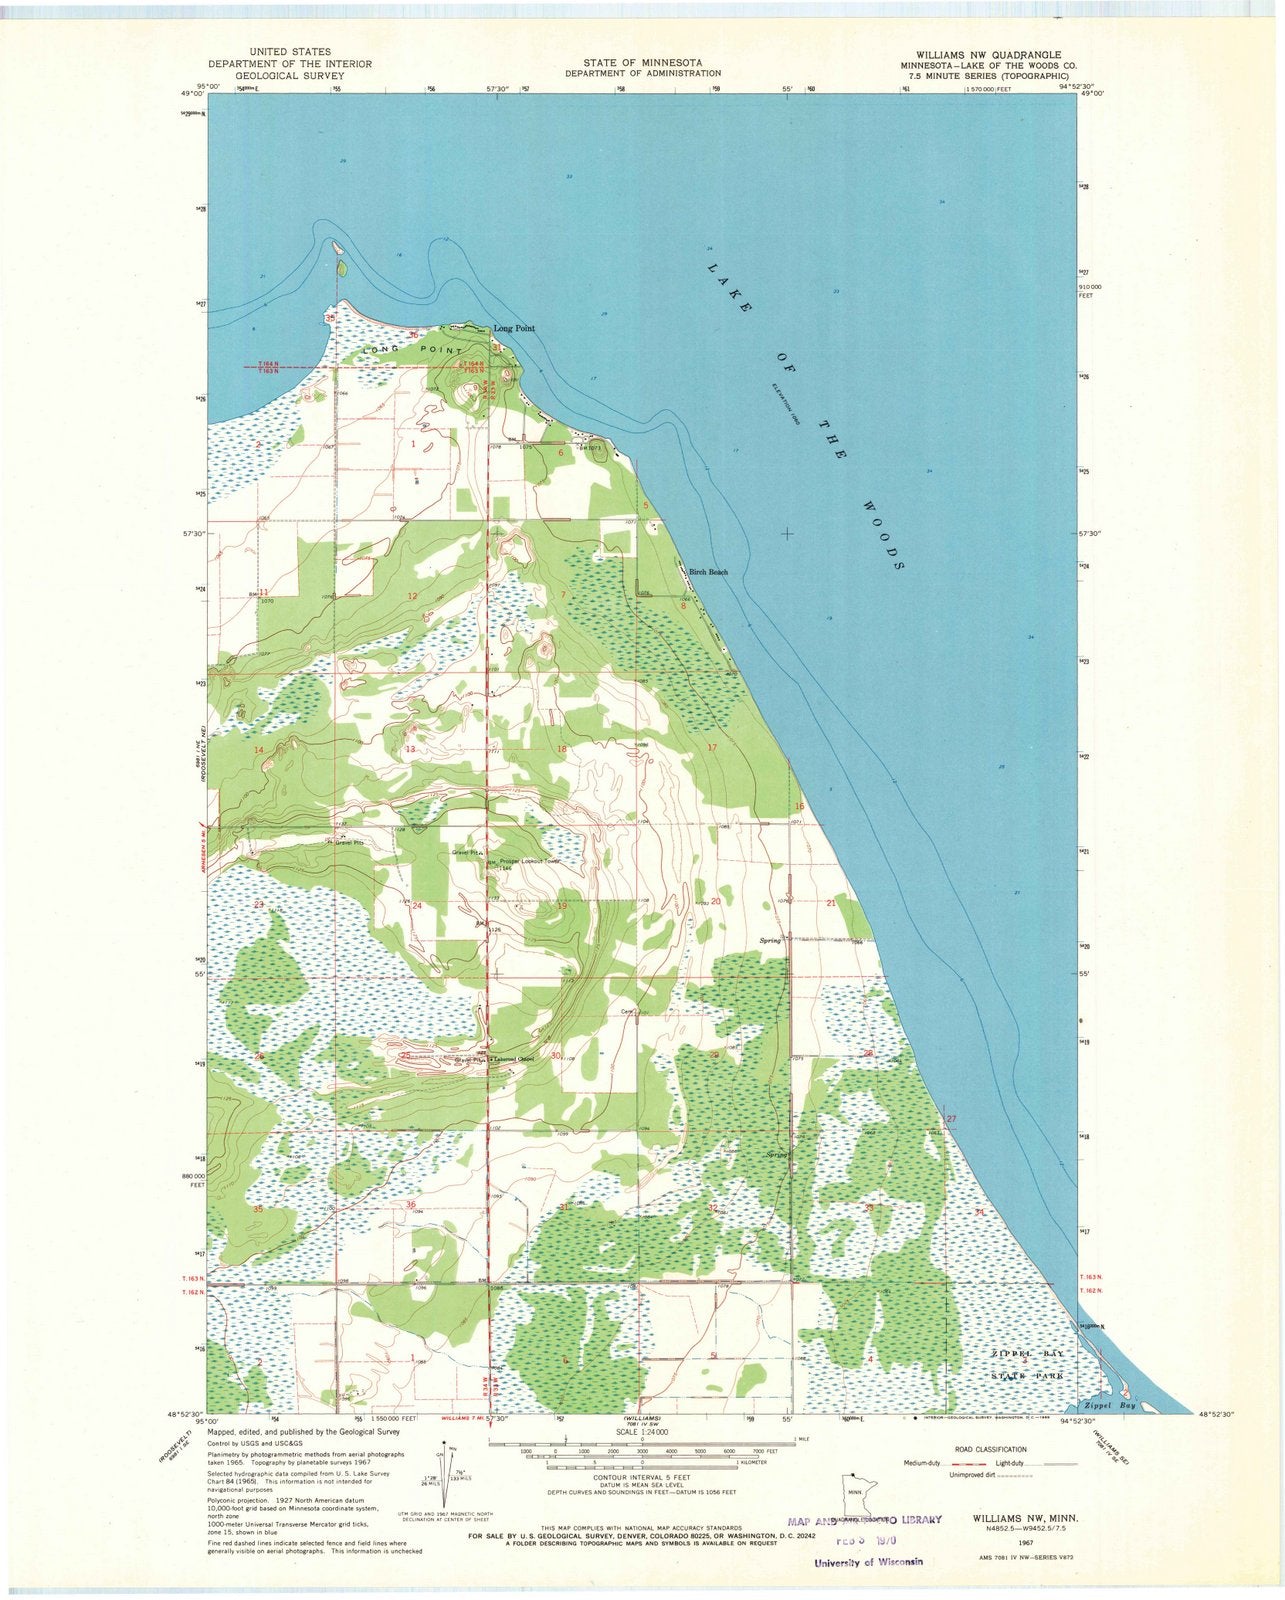 1967 Williams, MN - Minnesota - USGS Topographic Map